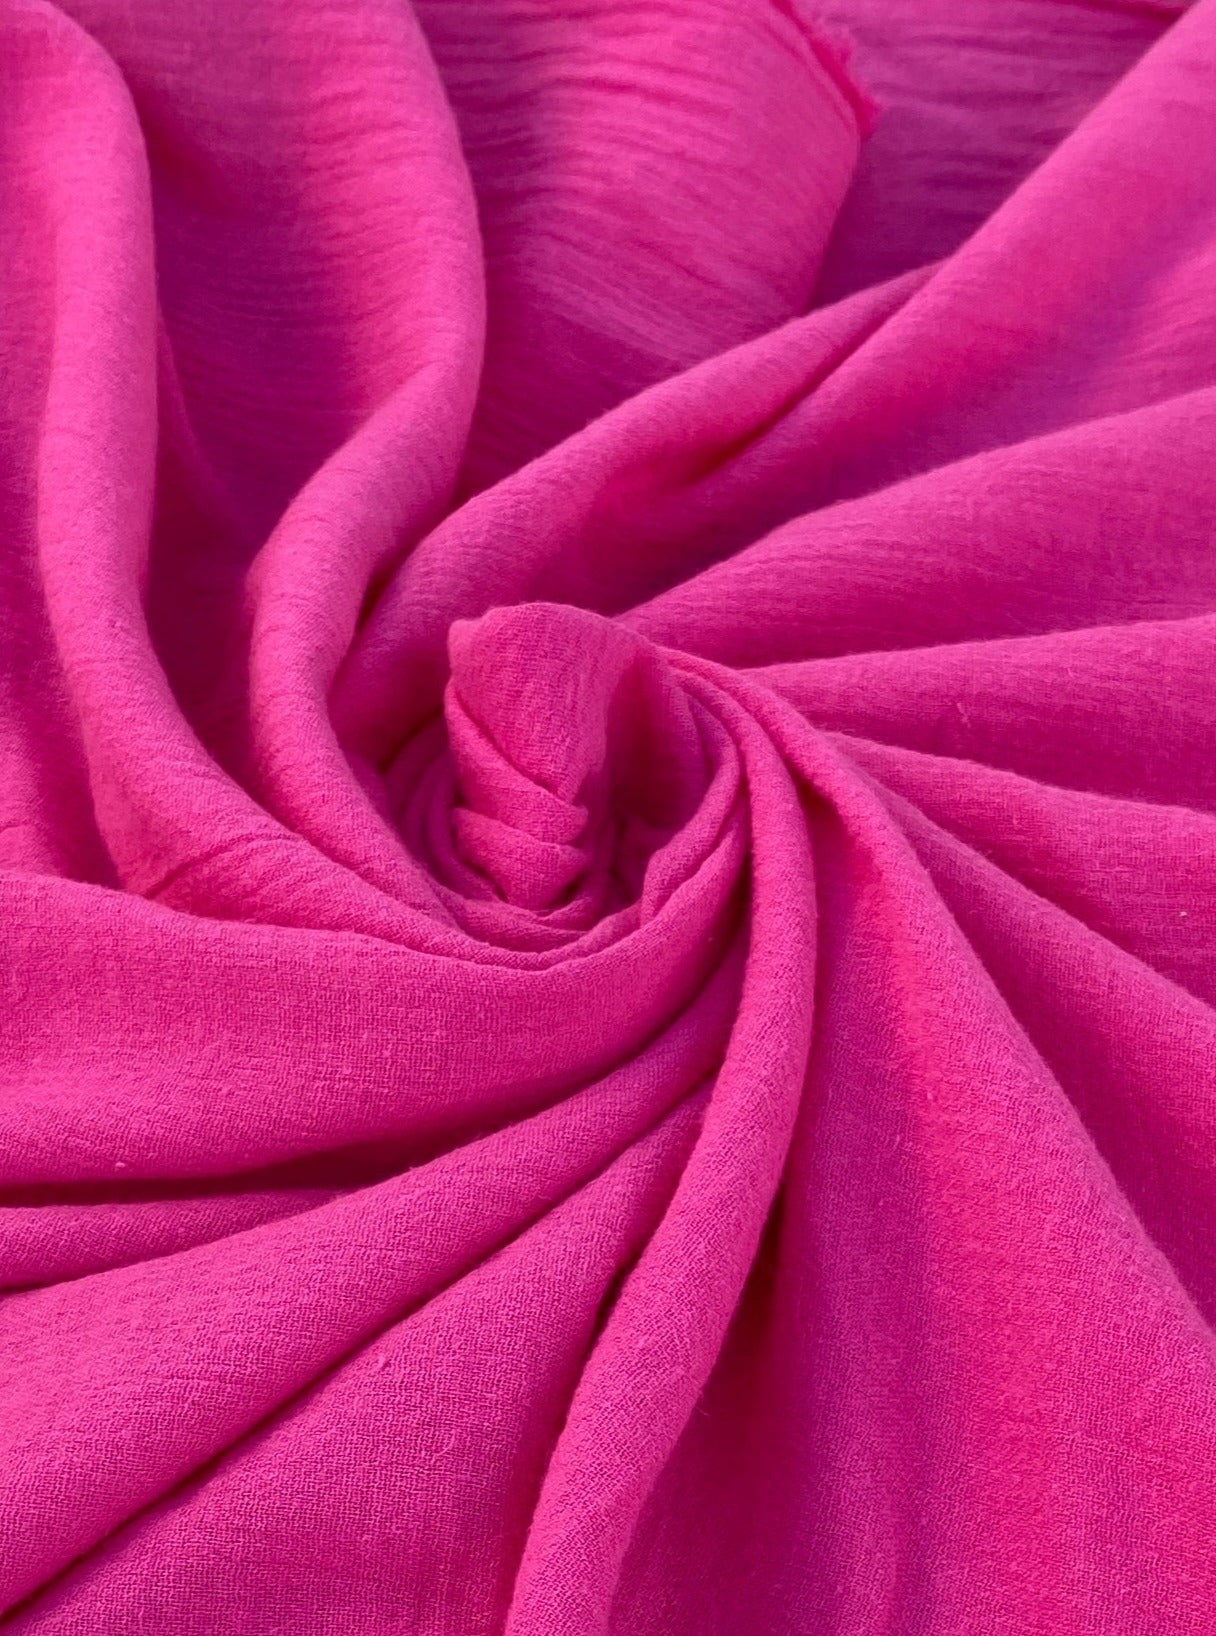 Fuchsia cotton gauze, hot pink cotton gauze,  hot pink crinkle gauze, textured gauze, sheer gauze pink, pink gauze fabric